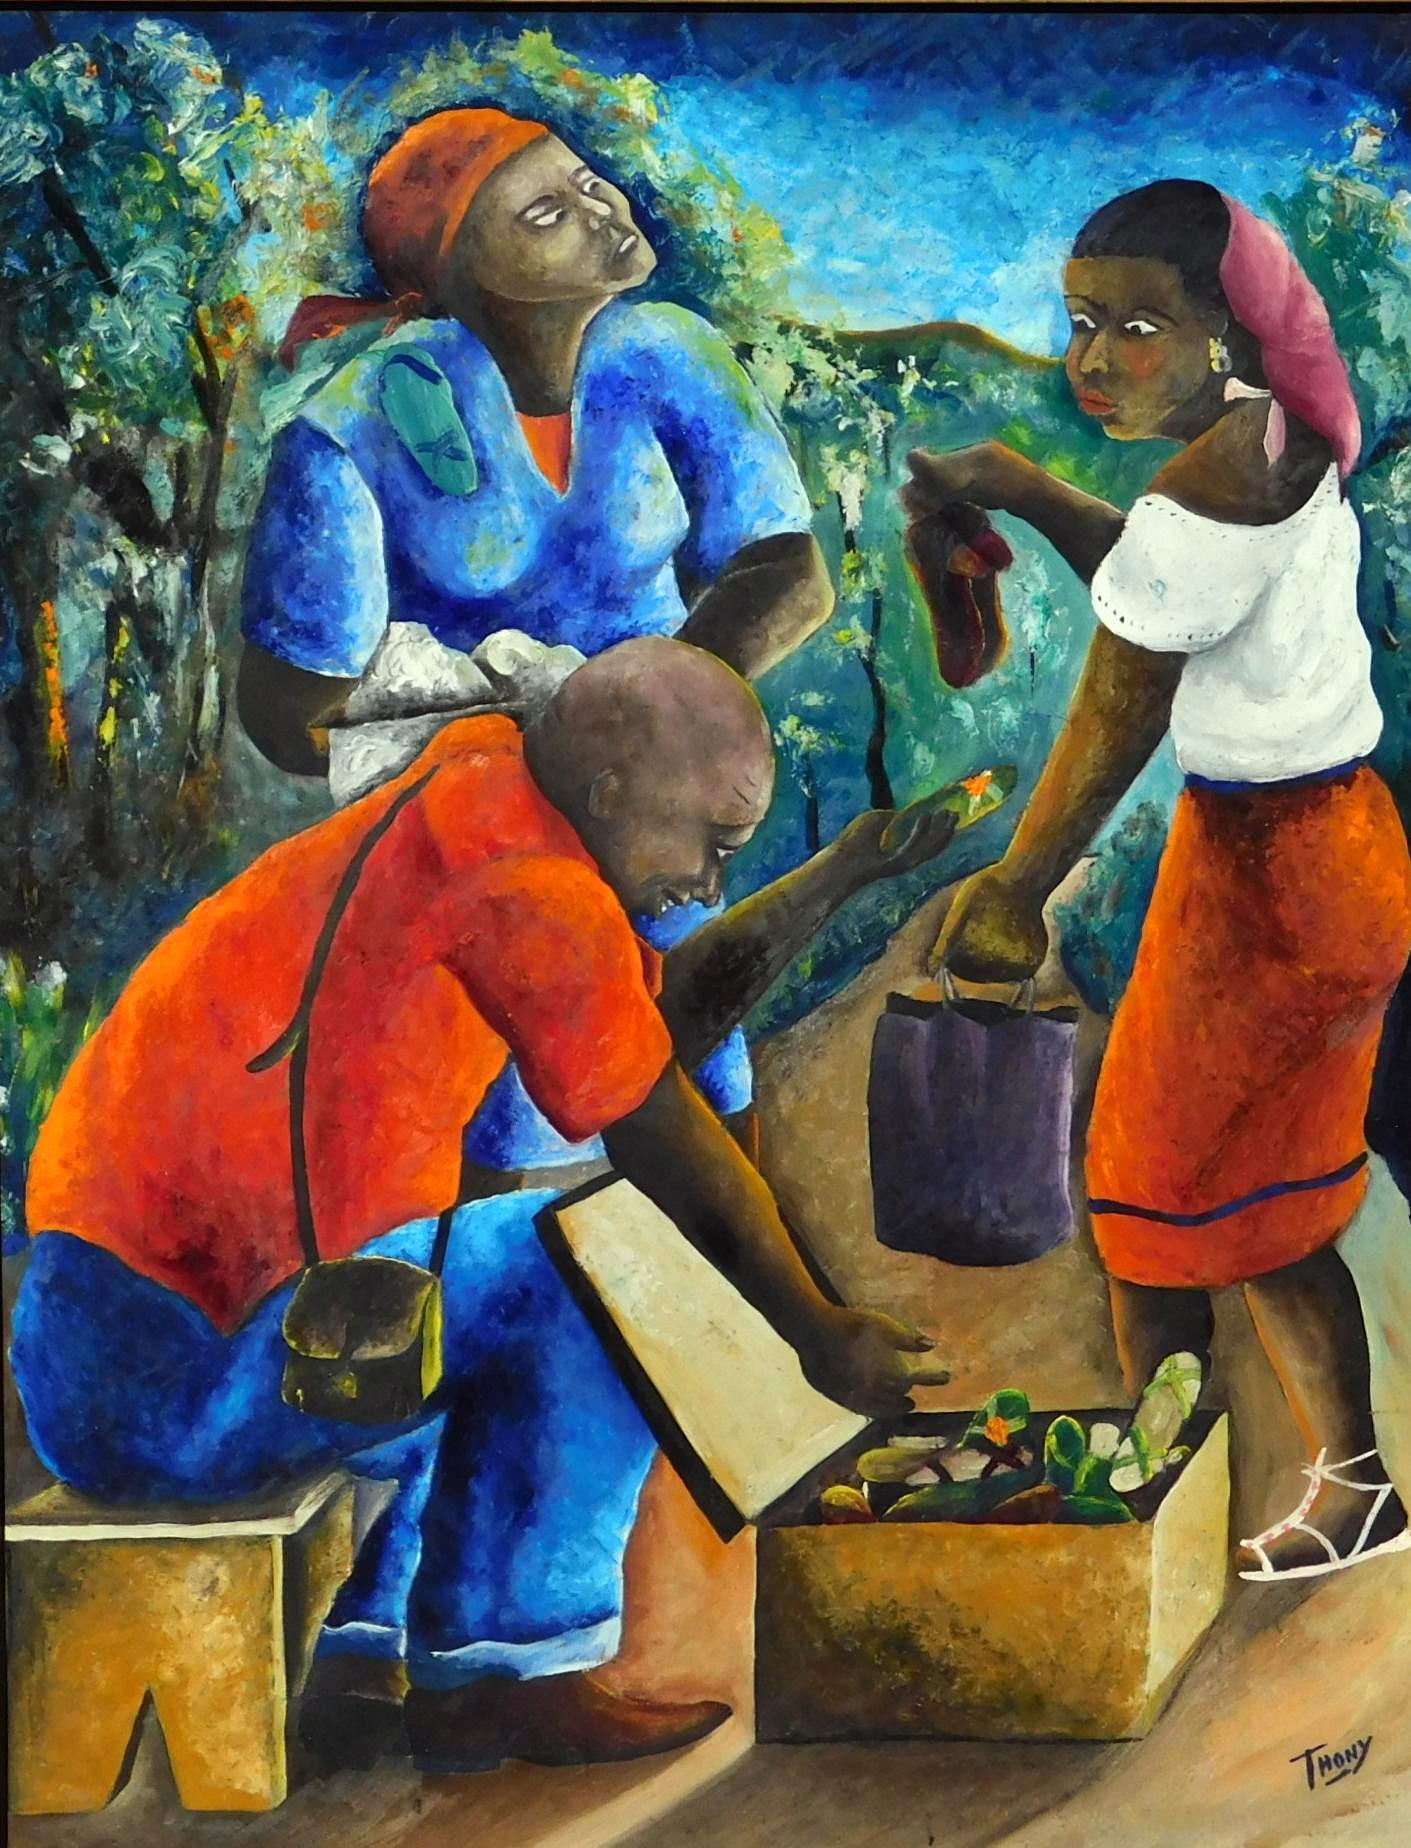 Joseph Thony Moises (TiTonton) (geb. 1933 -?) - haitianischer Künstler 
Medium: Original Öl auf Leinwand. 
Thema: Der Shoe Seller. 
Erstellt: CIRCA 1950er Jahre.
Gemälde Maße: 20 